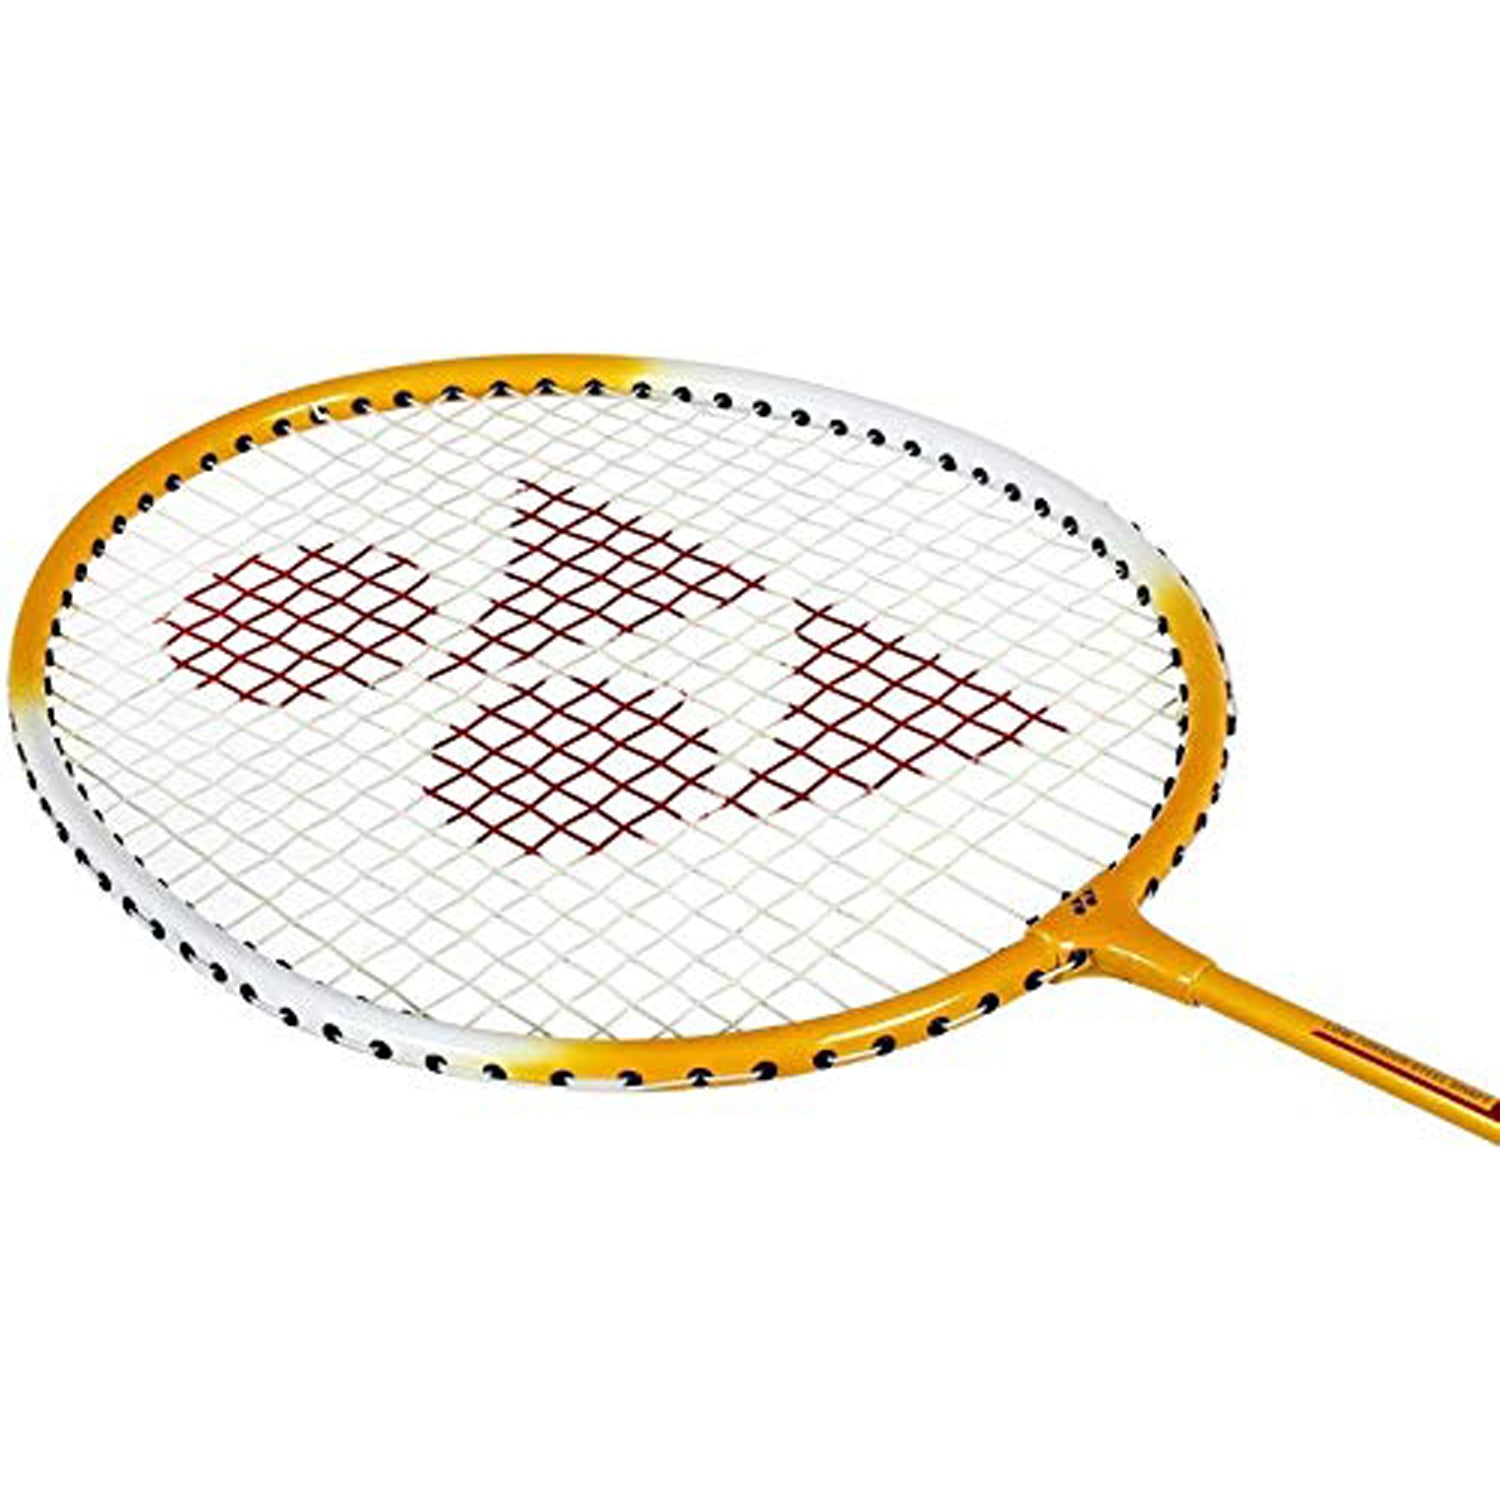 Yonex GR 303 Badminton Racquet with Full Cover - Yellow - Best Price online Prokicksports.com